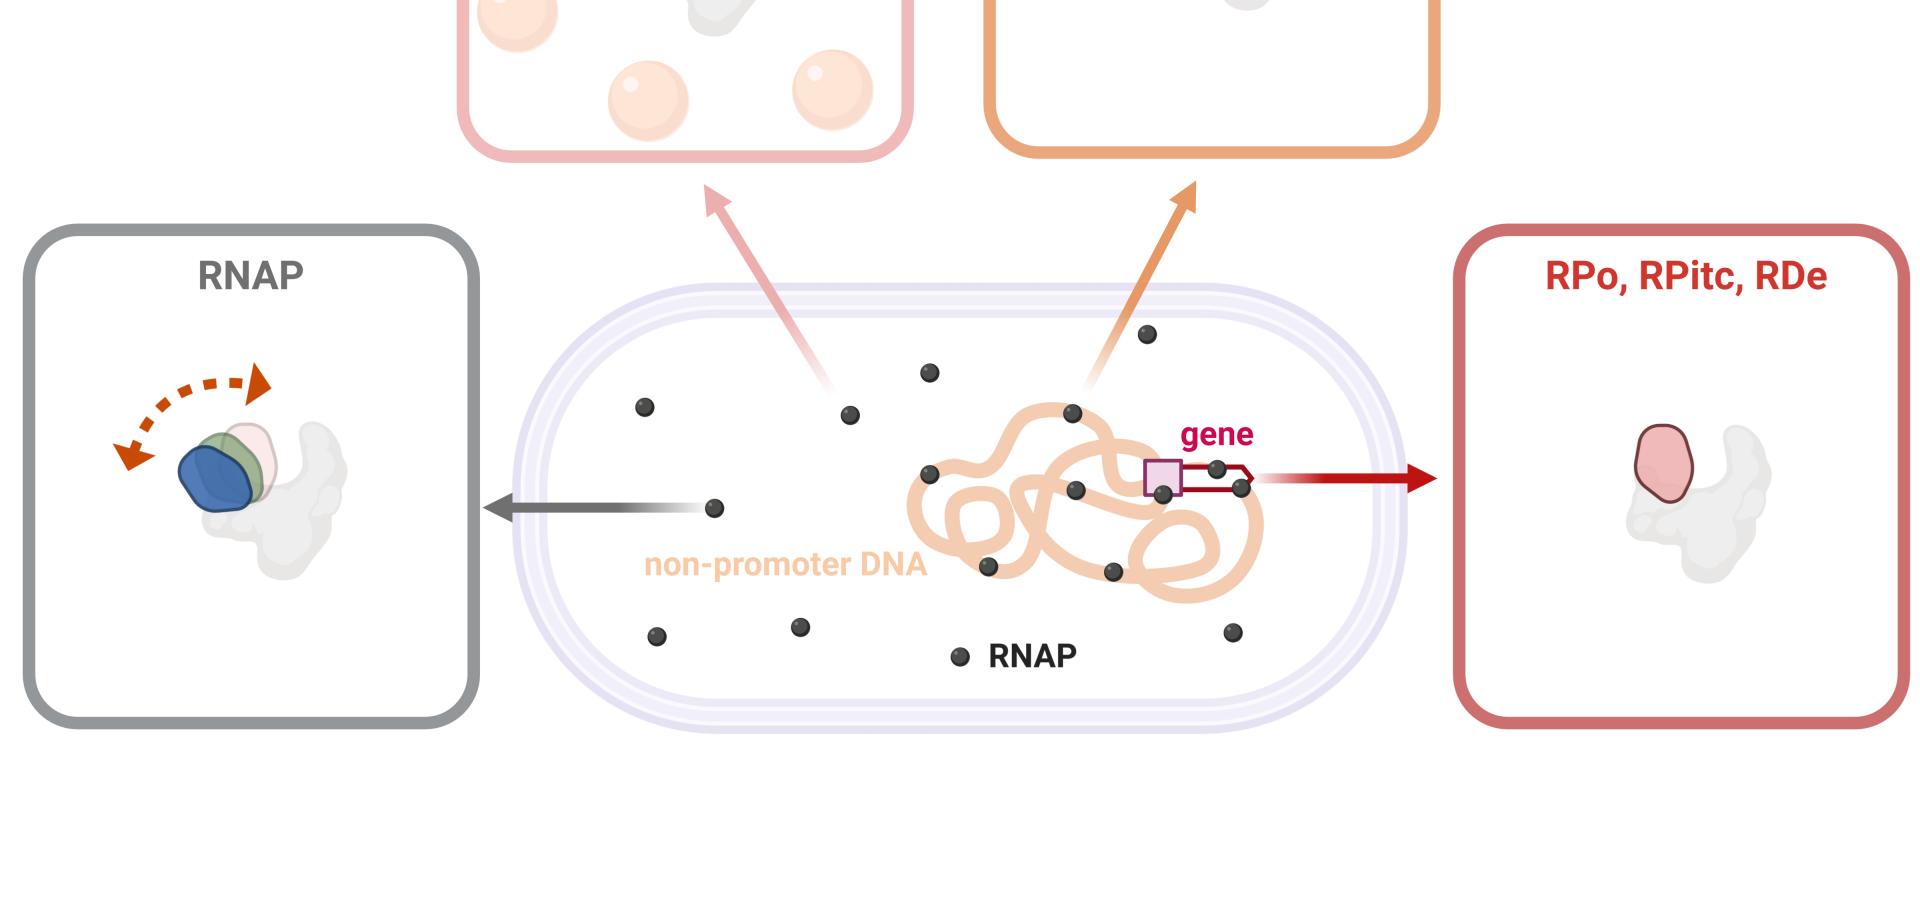 RNAP clamp conformational dynamics